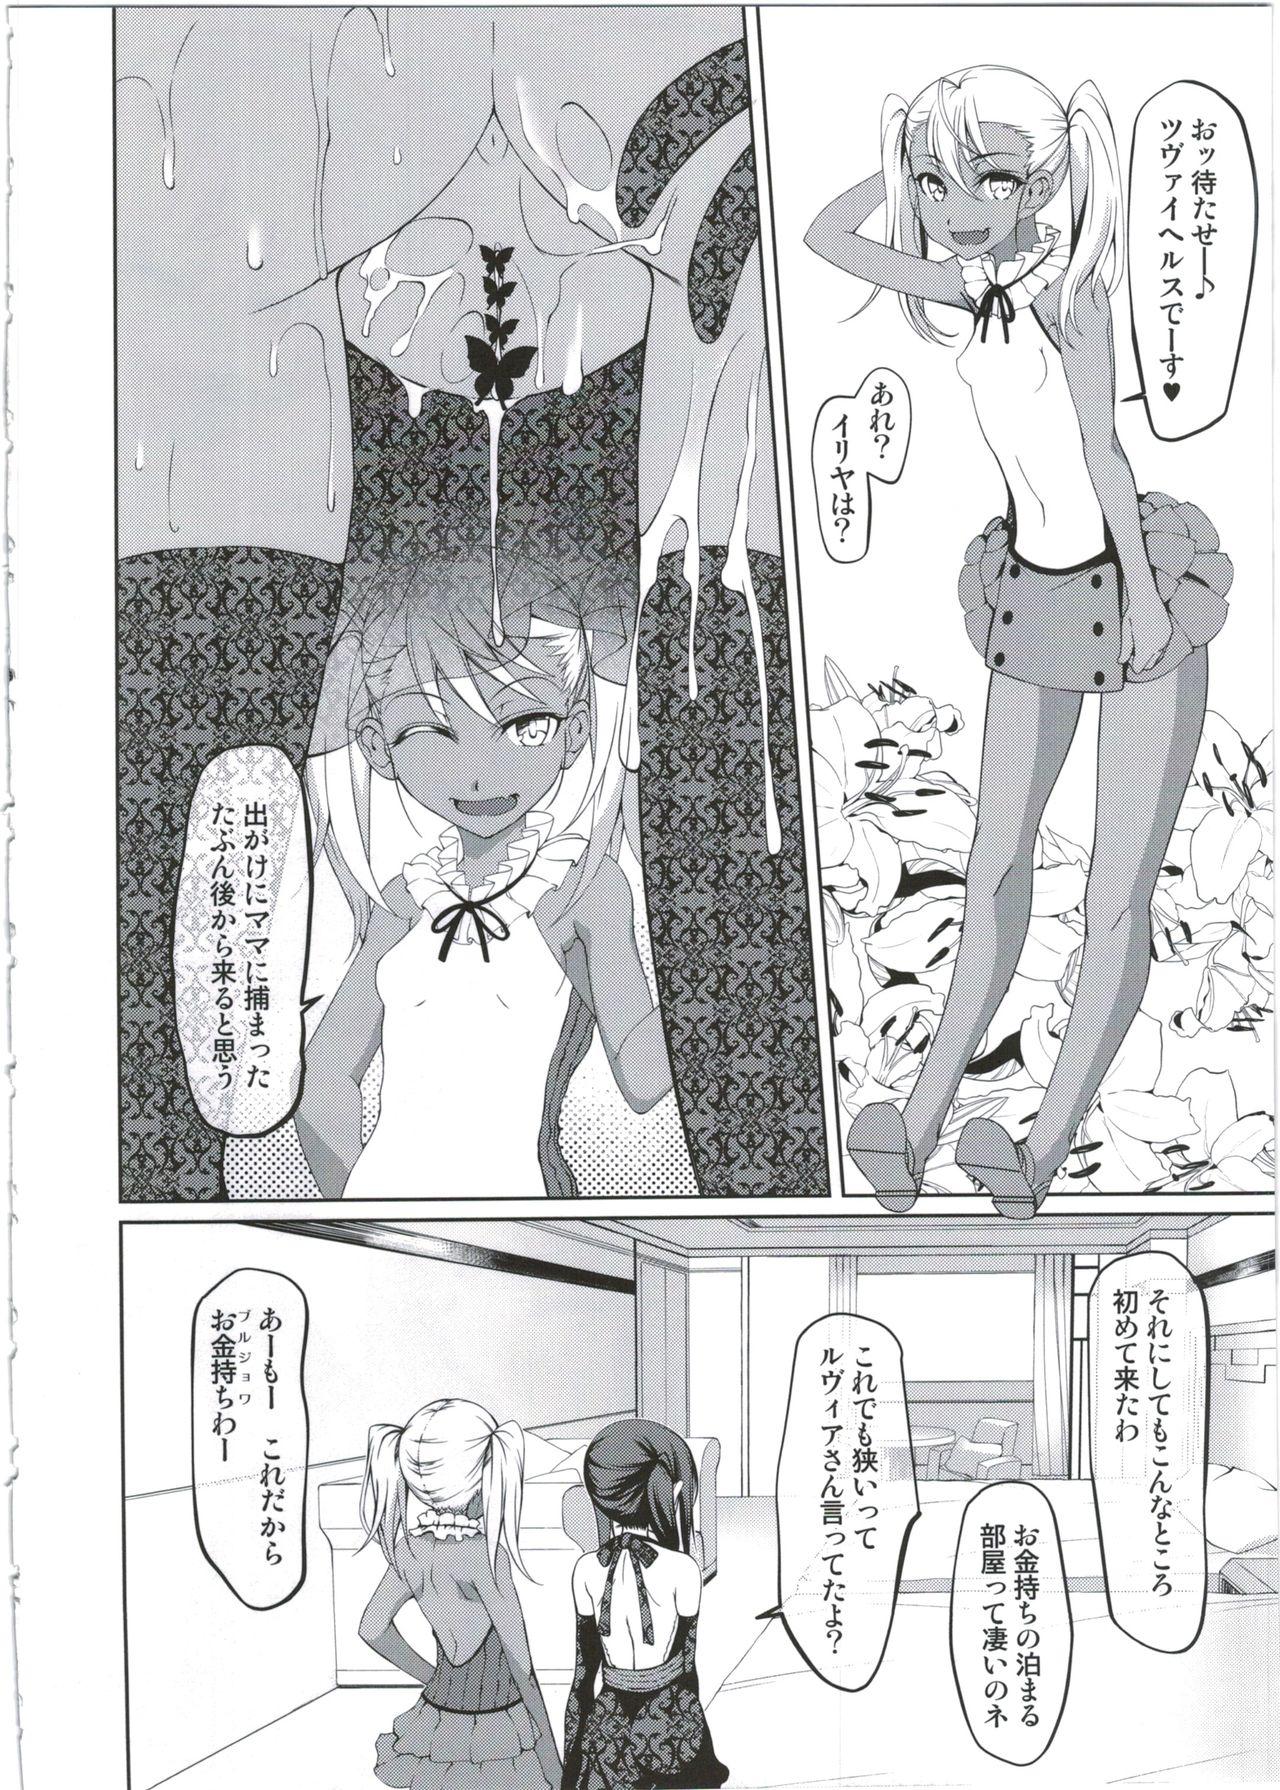 Pissing SHG:03 - Fate kaleid liner prisma illya Action - Page 10